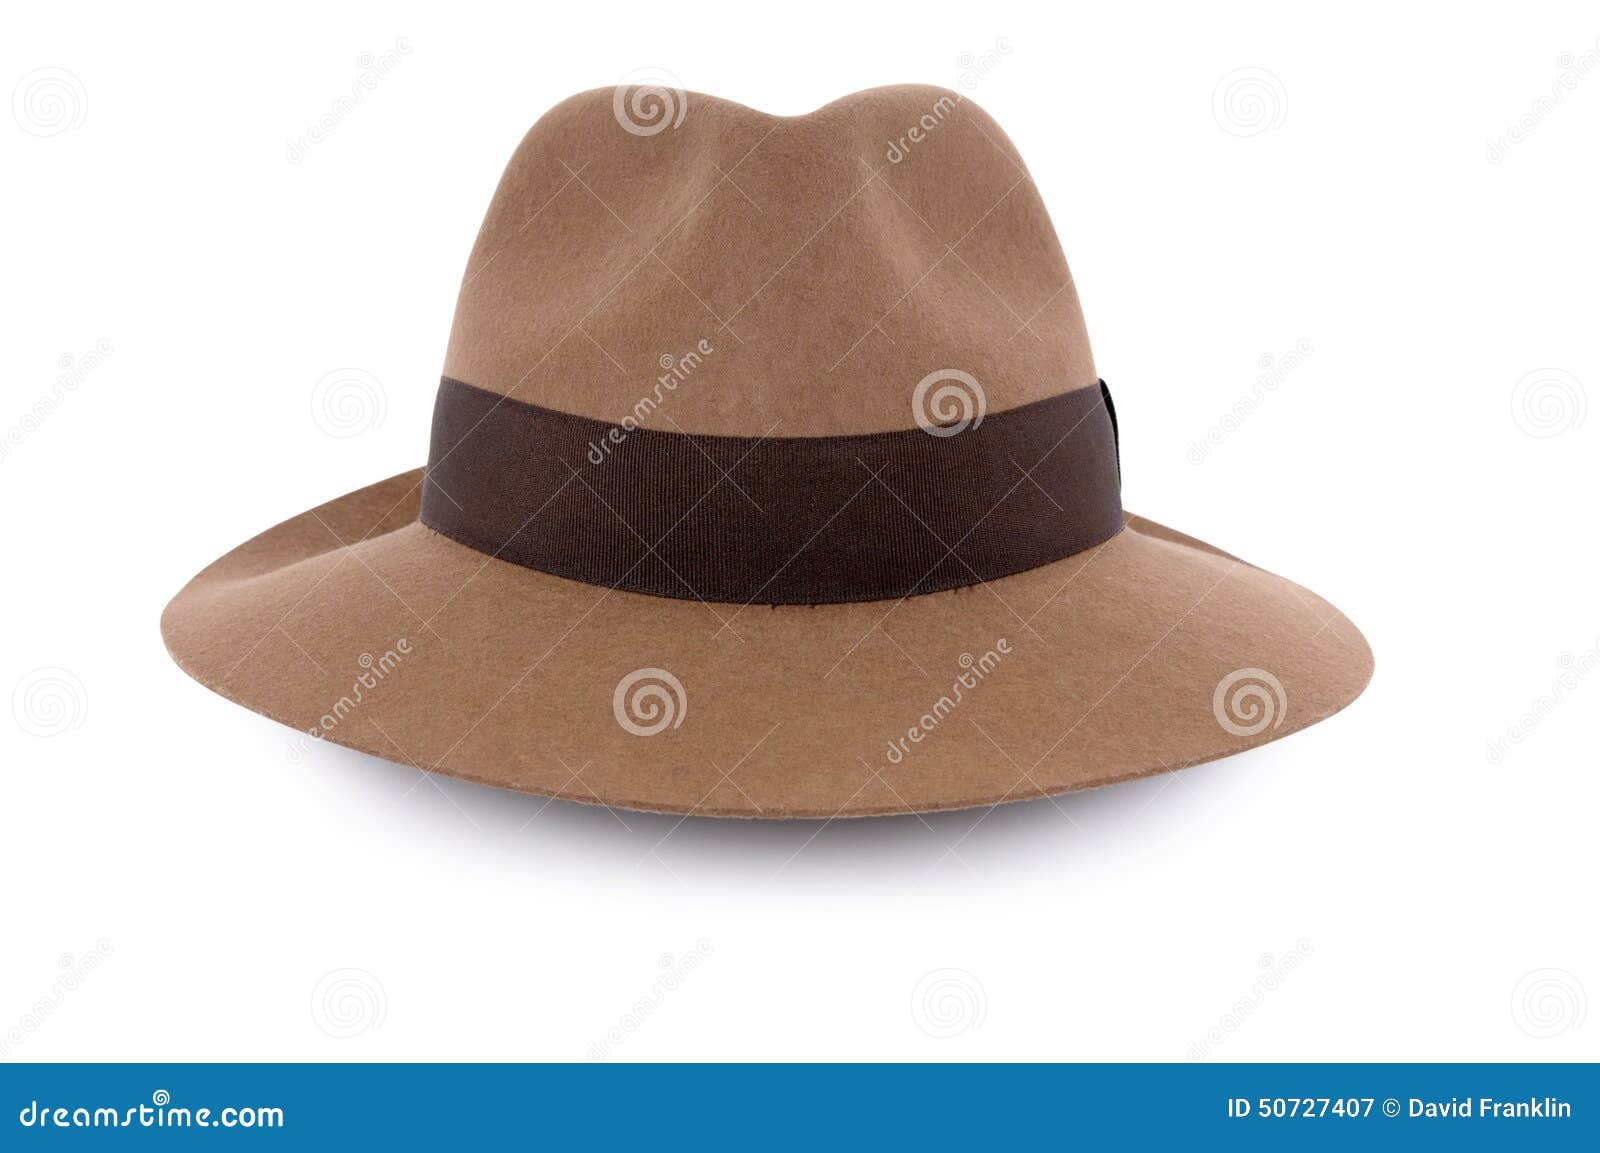 old tan brown felt fedora hat  on white background